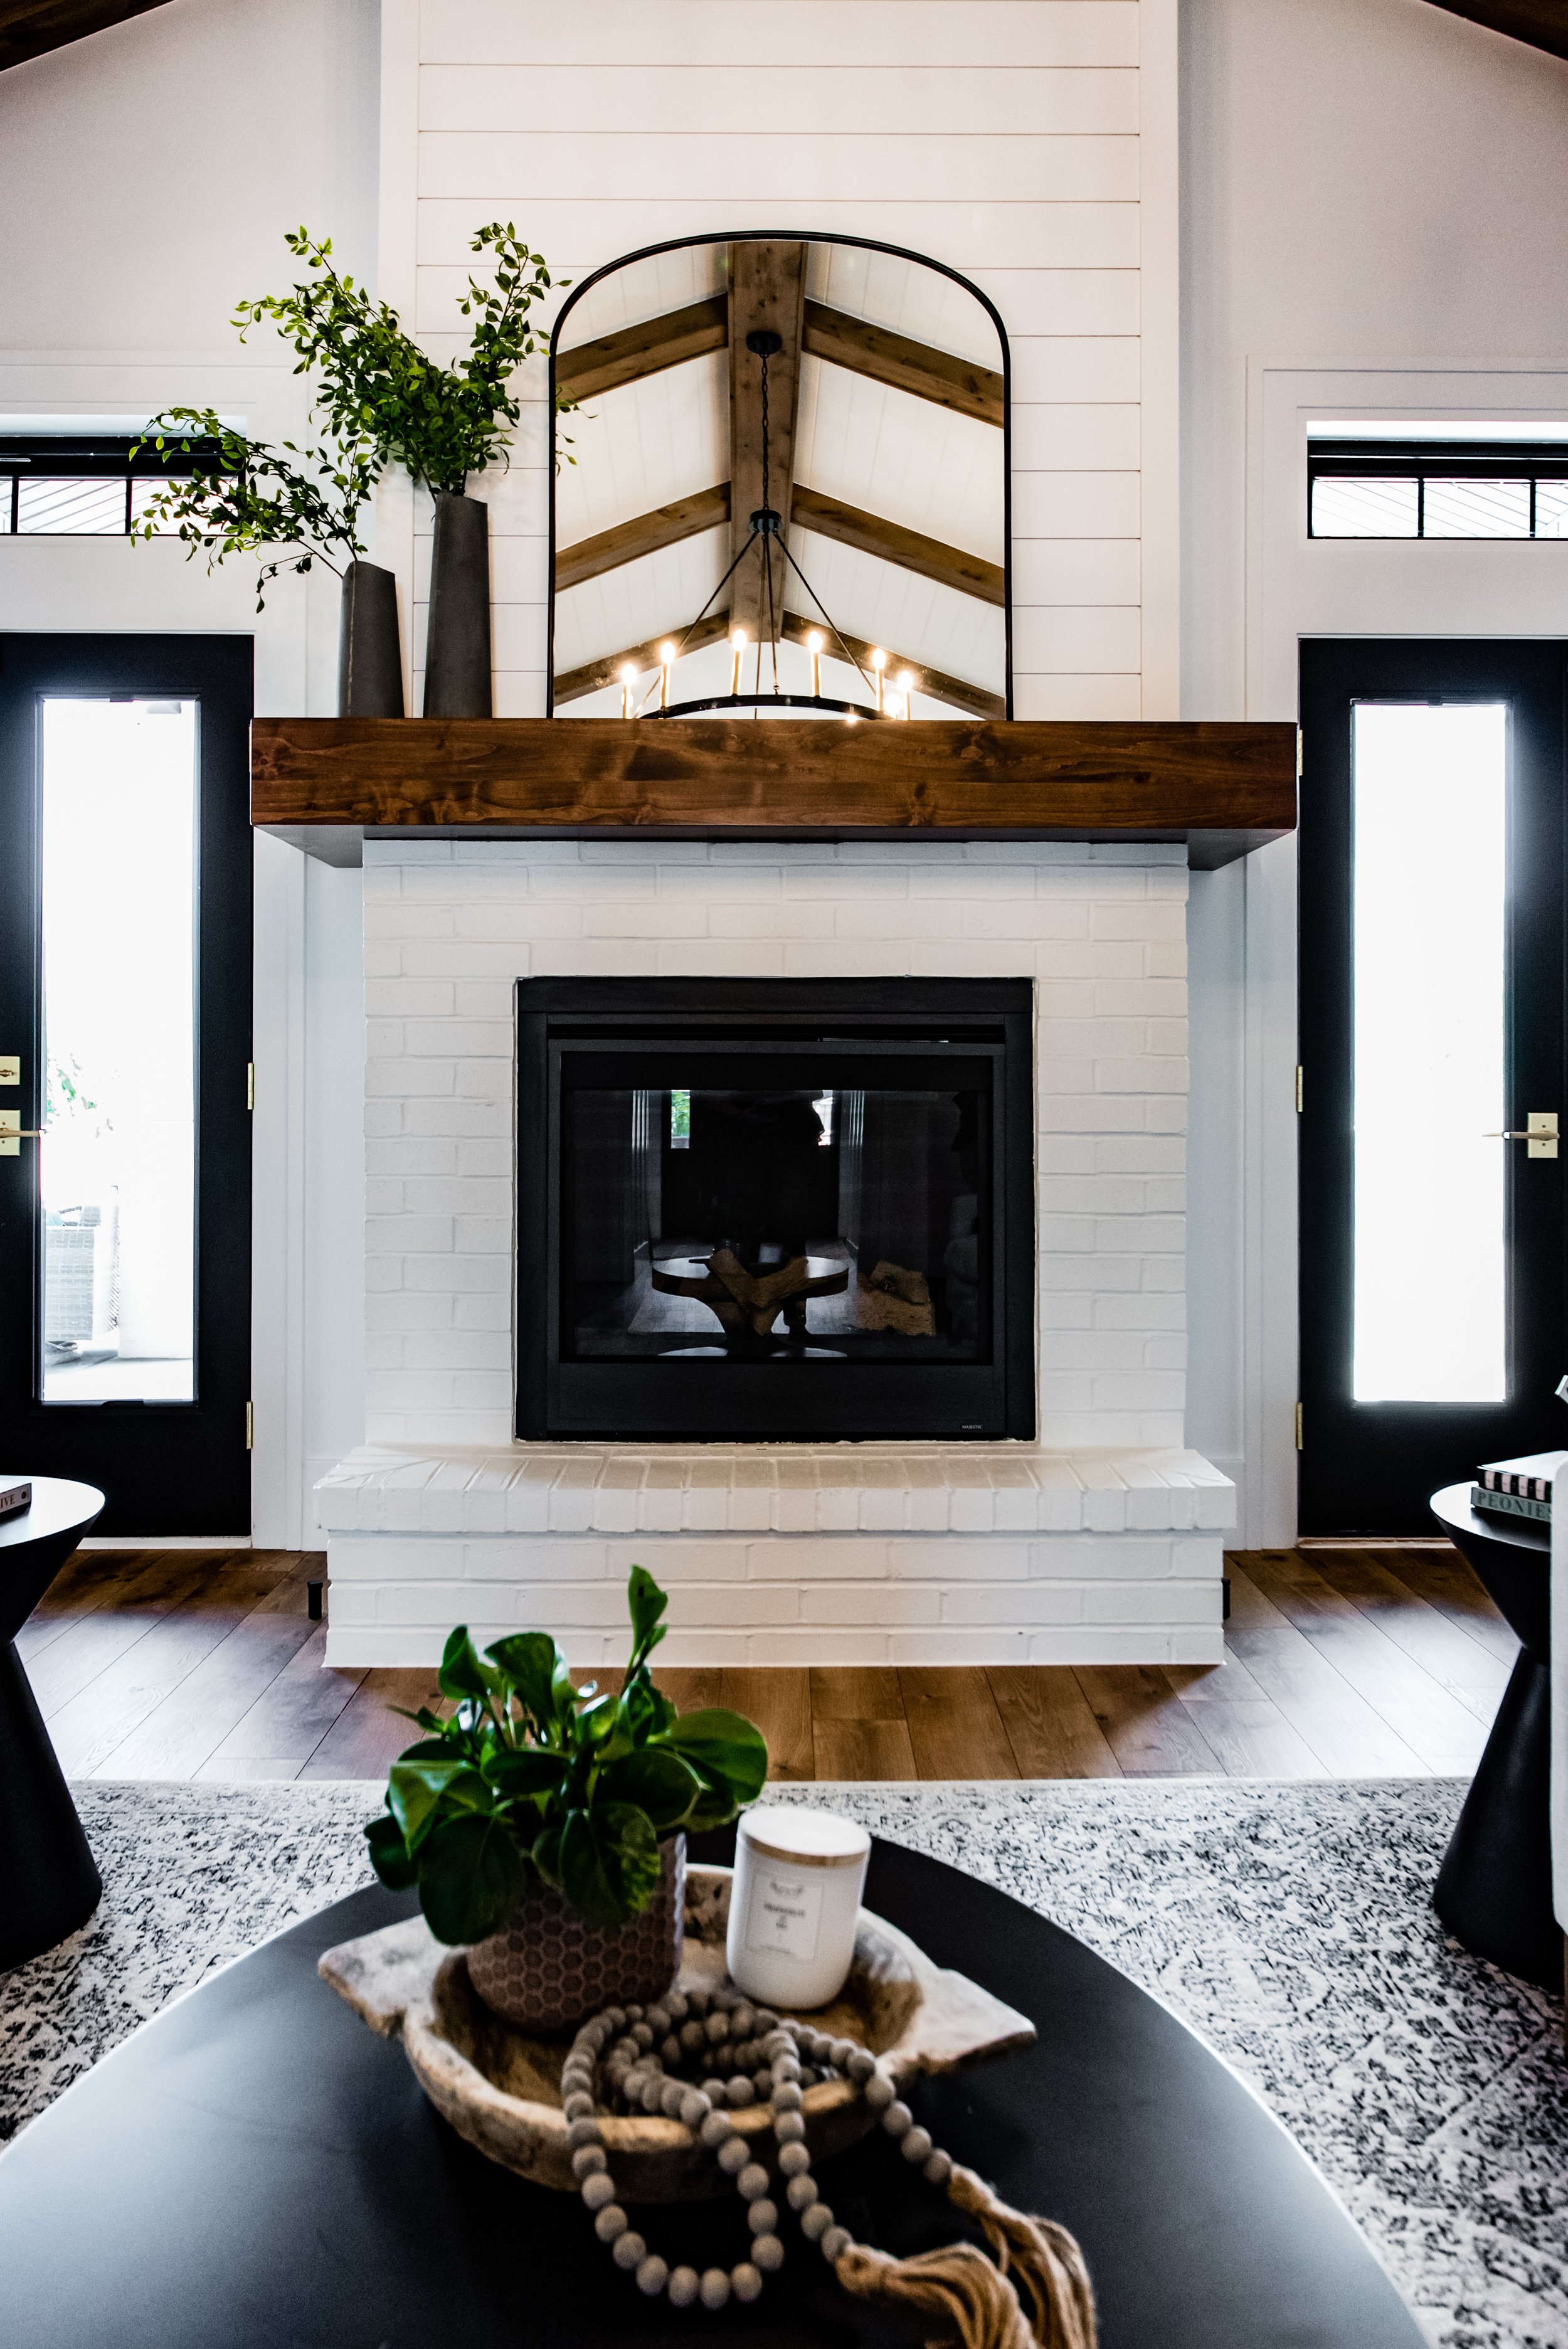  Northern Utah Liz Powell Design an interior design company offers one-hour design consultations answering any questions. remodel consultation #LizPowellDesign #InteriorDesignUtah #CacheValleyNewBuilds #CacheValleyInteriors #FullServiceDesign #Custom